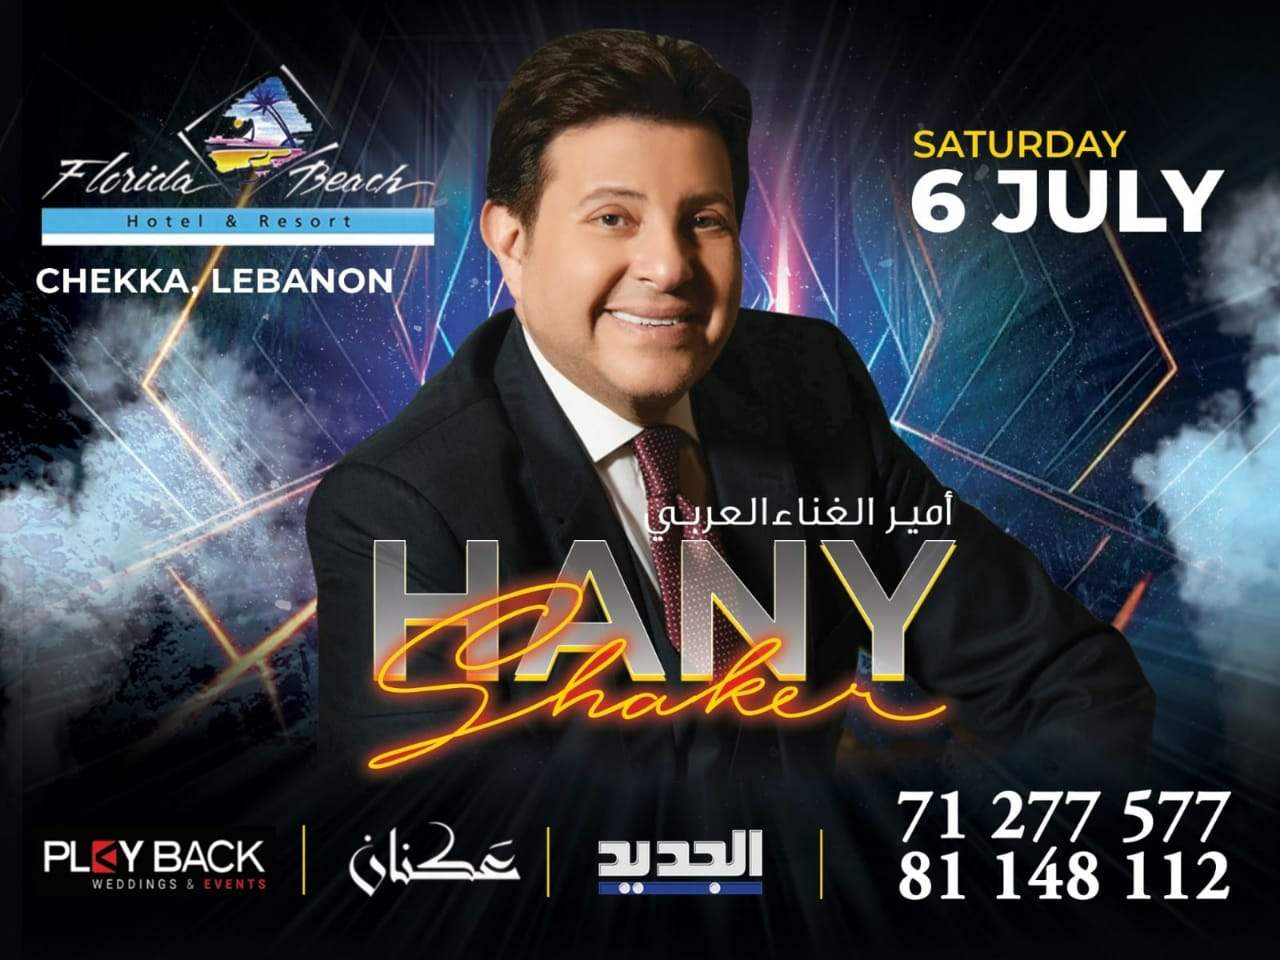 هاني شاكر  يحيي حفلا غنائيا ضخما في لبنان الشهر المقبل 